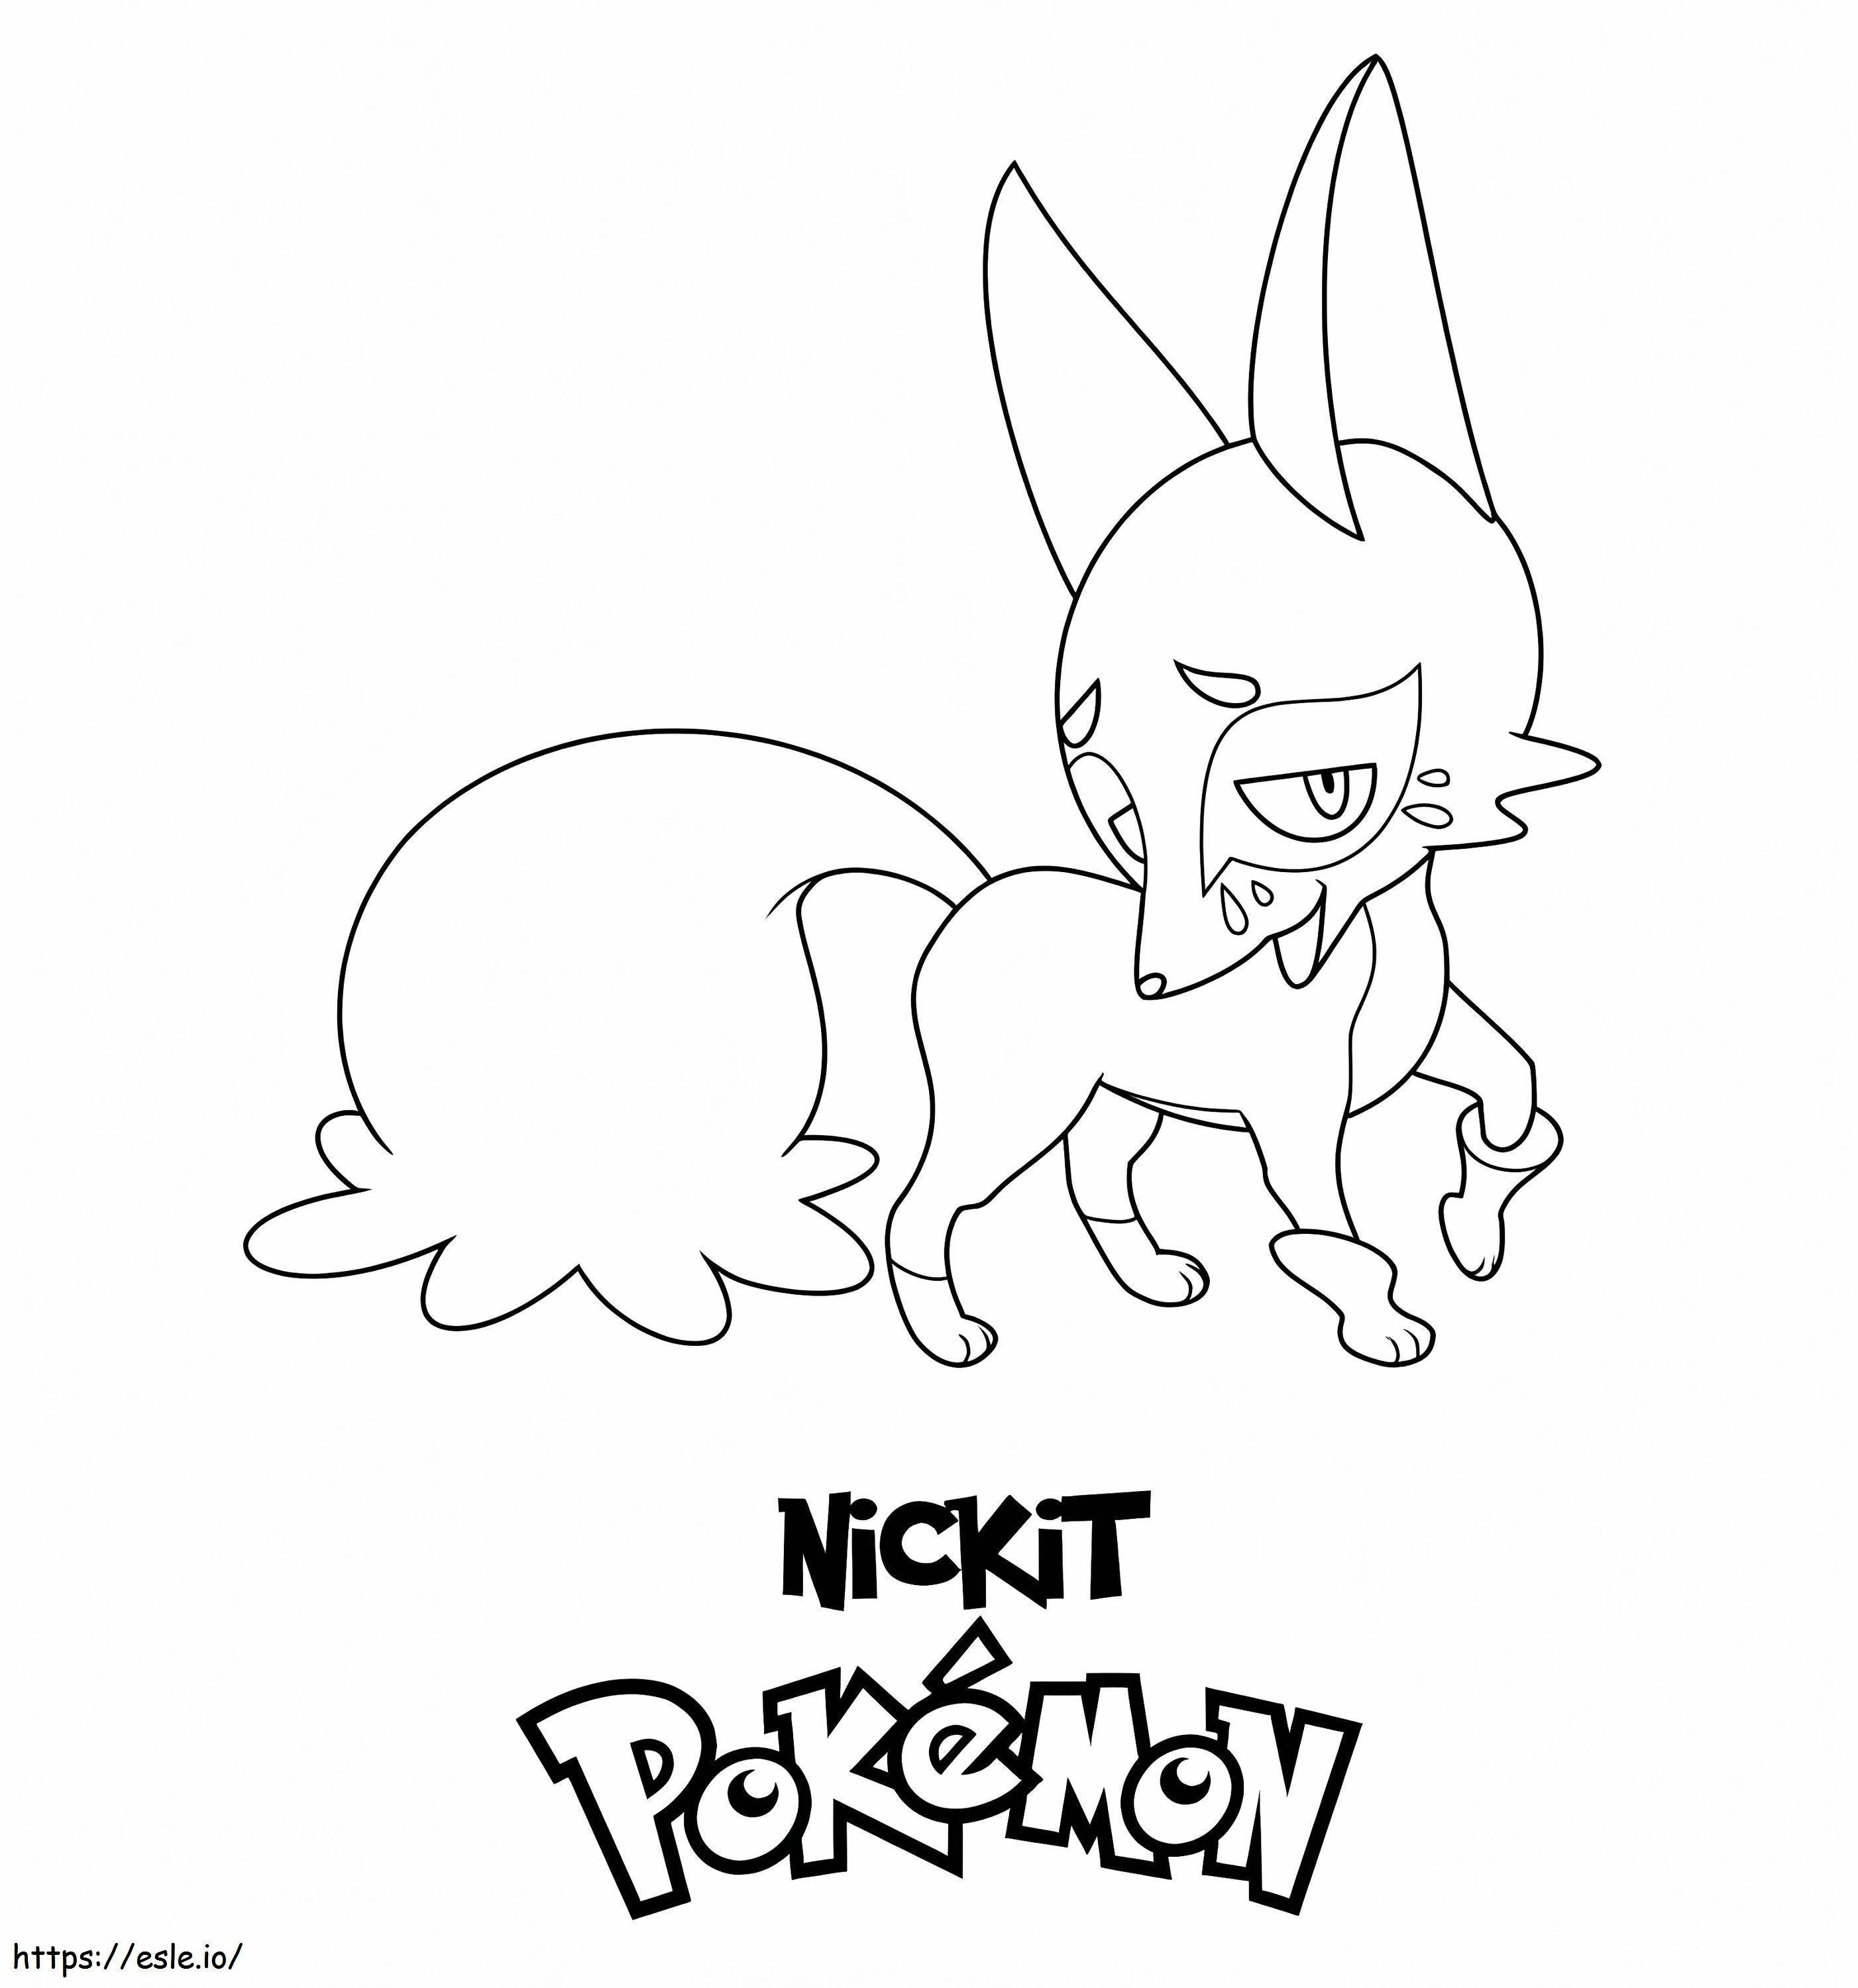 Nicknames Pokemon coloring page